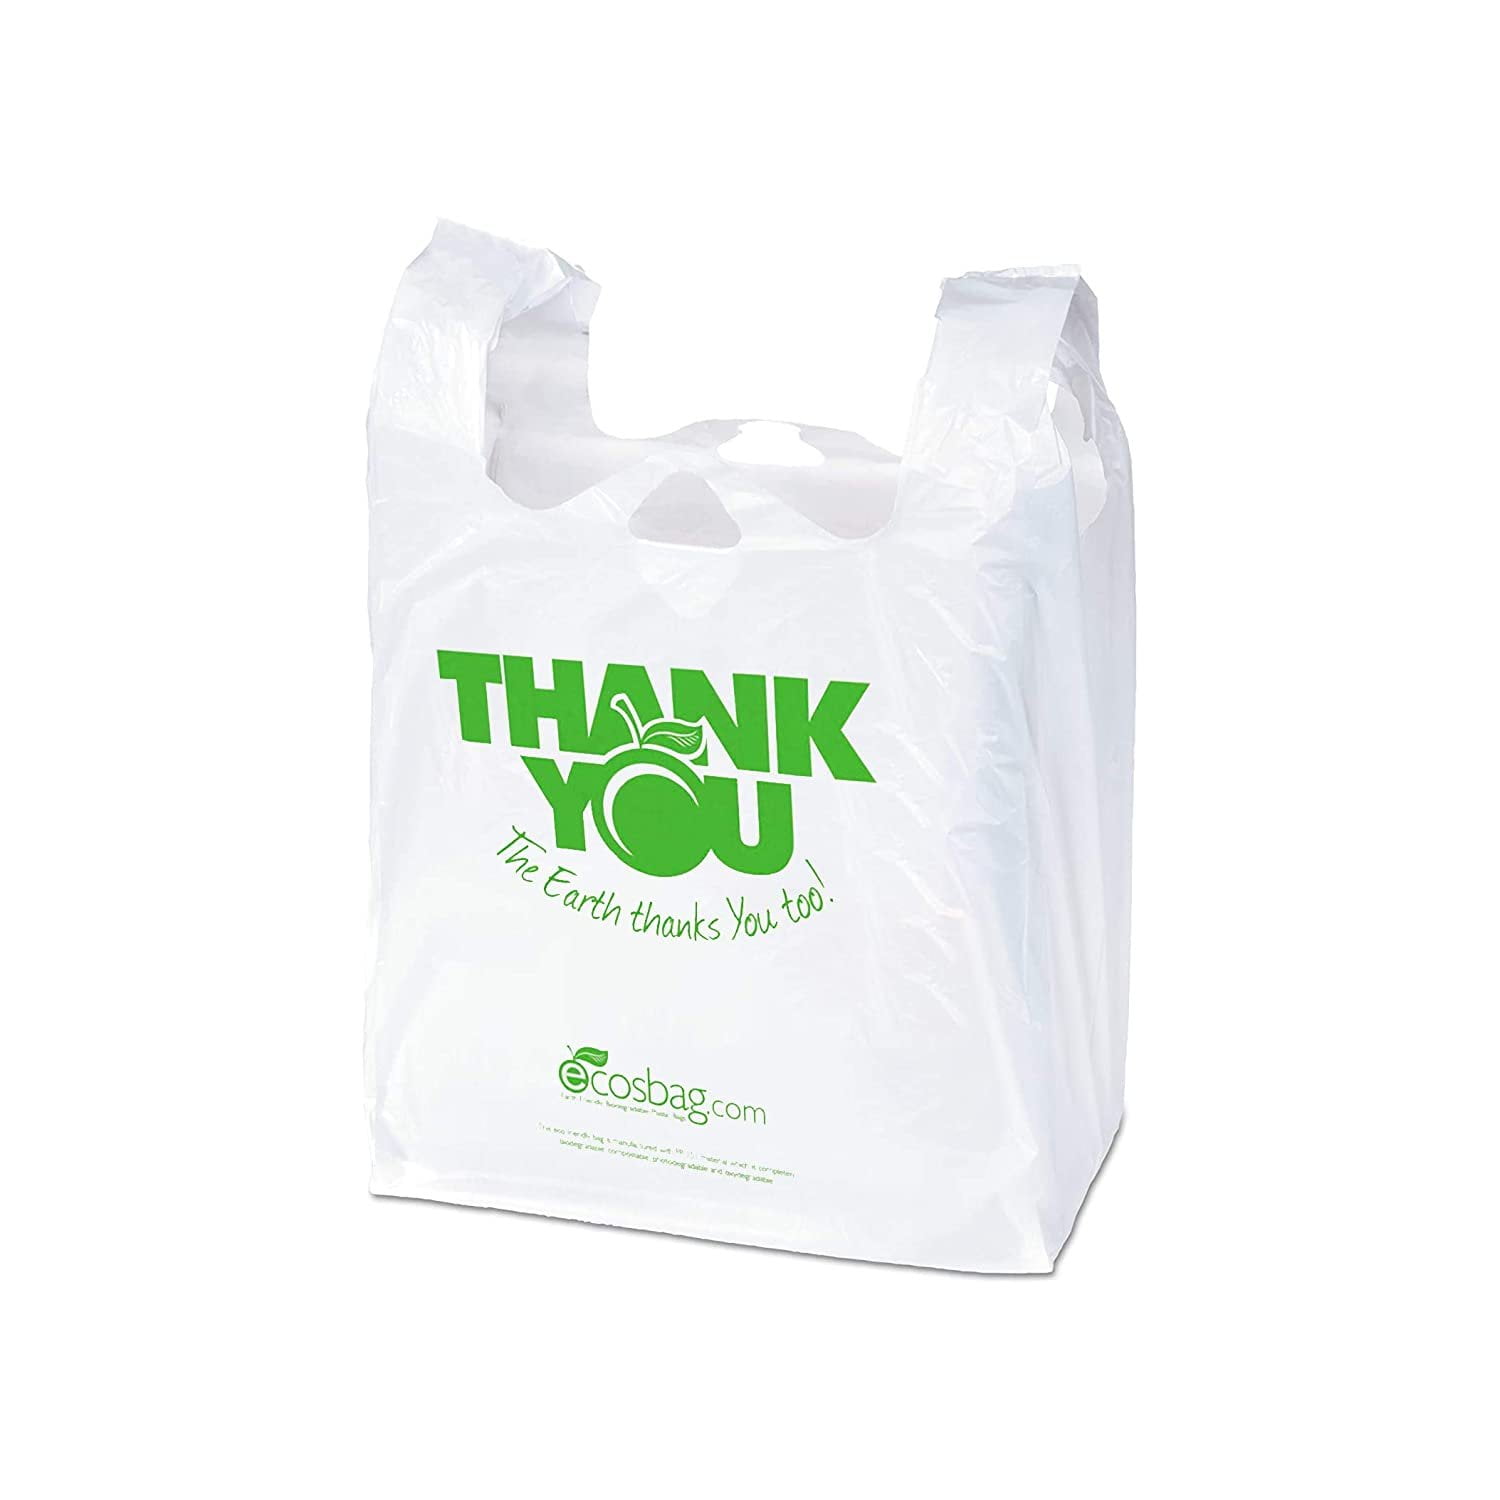 THANK YOU T-Shirt Bags 11.5" x 6" x 21" White Plastic Shopping bag 50-1000 